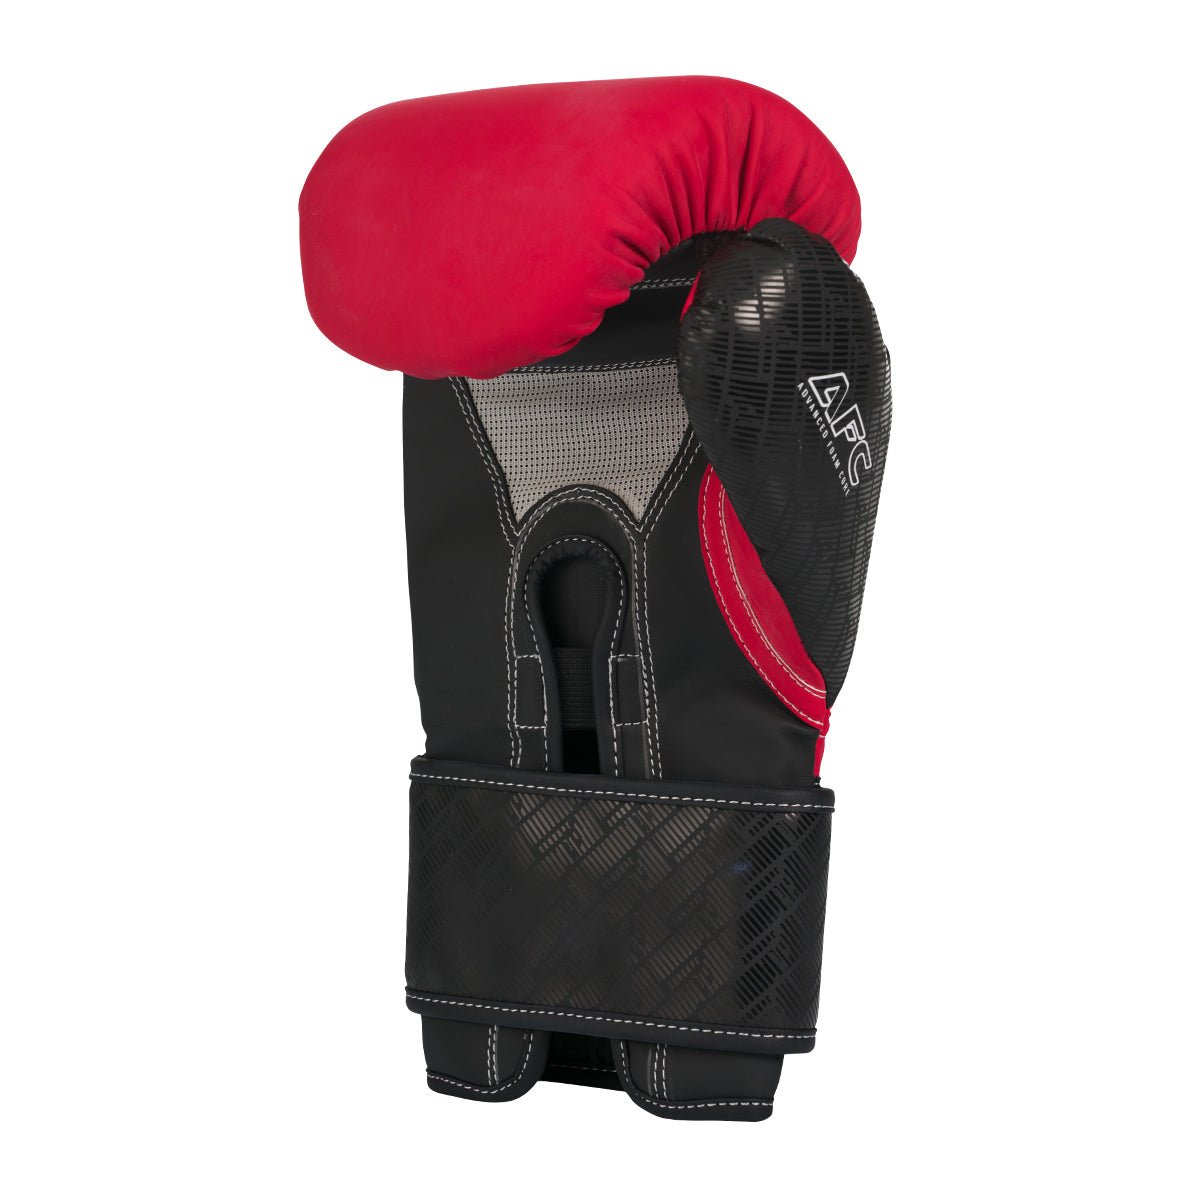 Brave Boxing Gloves - Red/Black